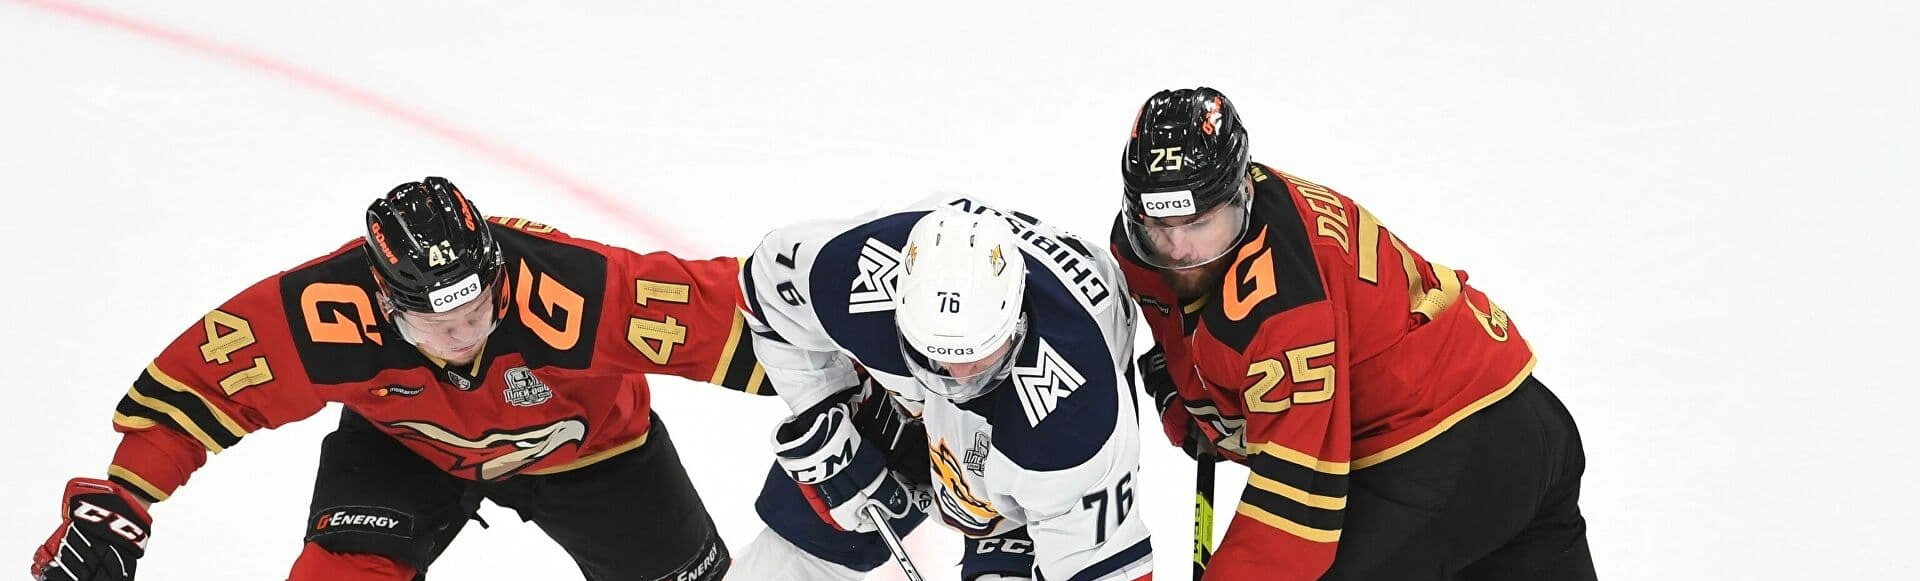 «Металлург» разгромил «Авангард» в четвертом матче серии второго раунда плей-офф КХЛ
